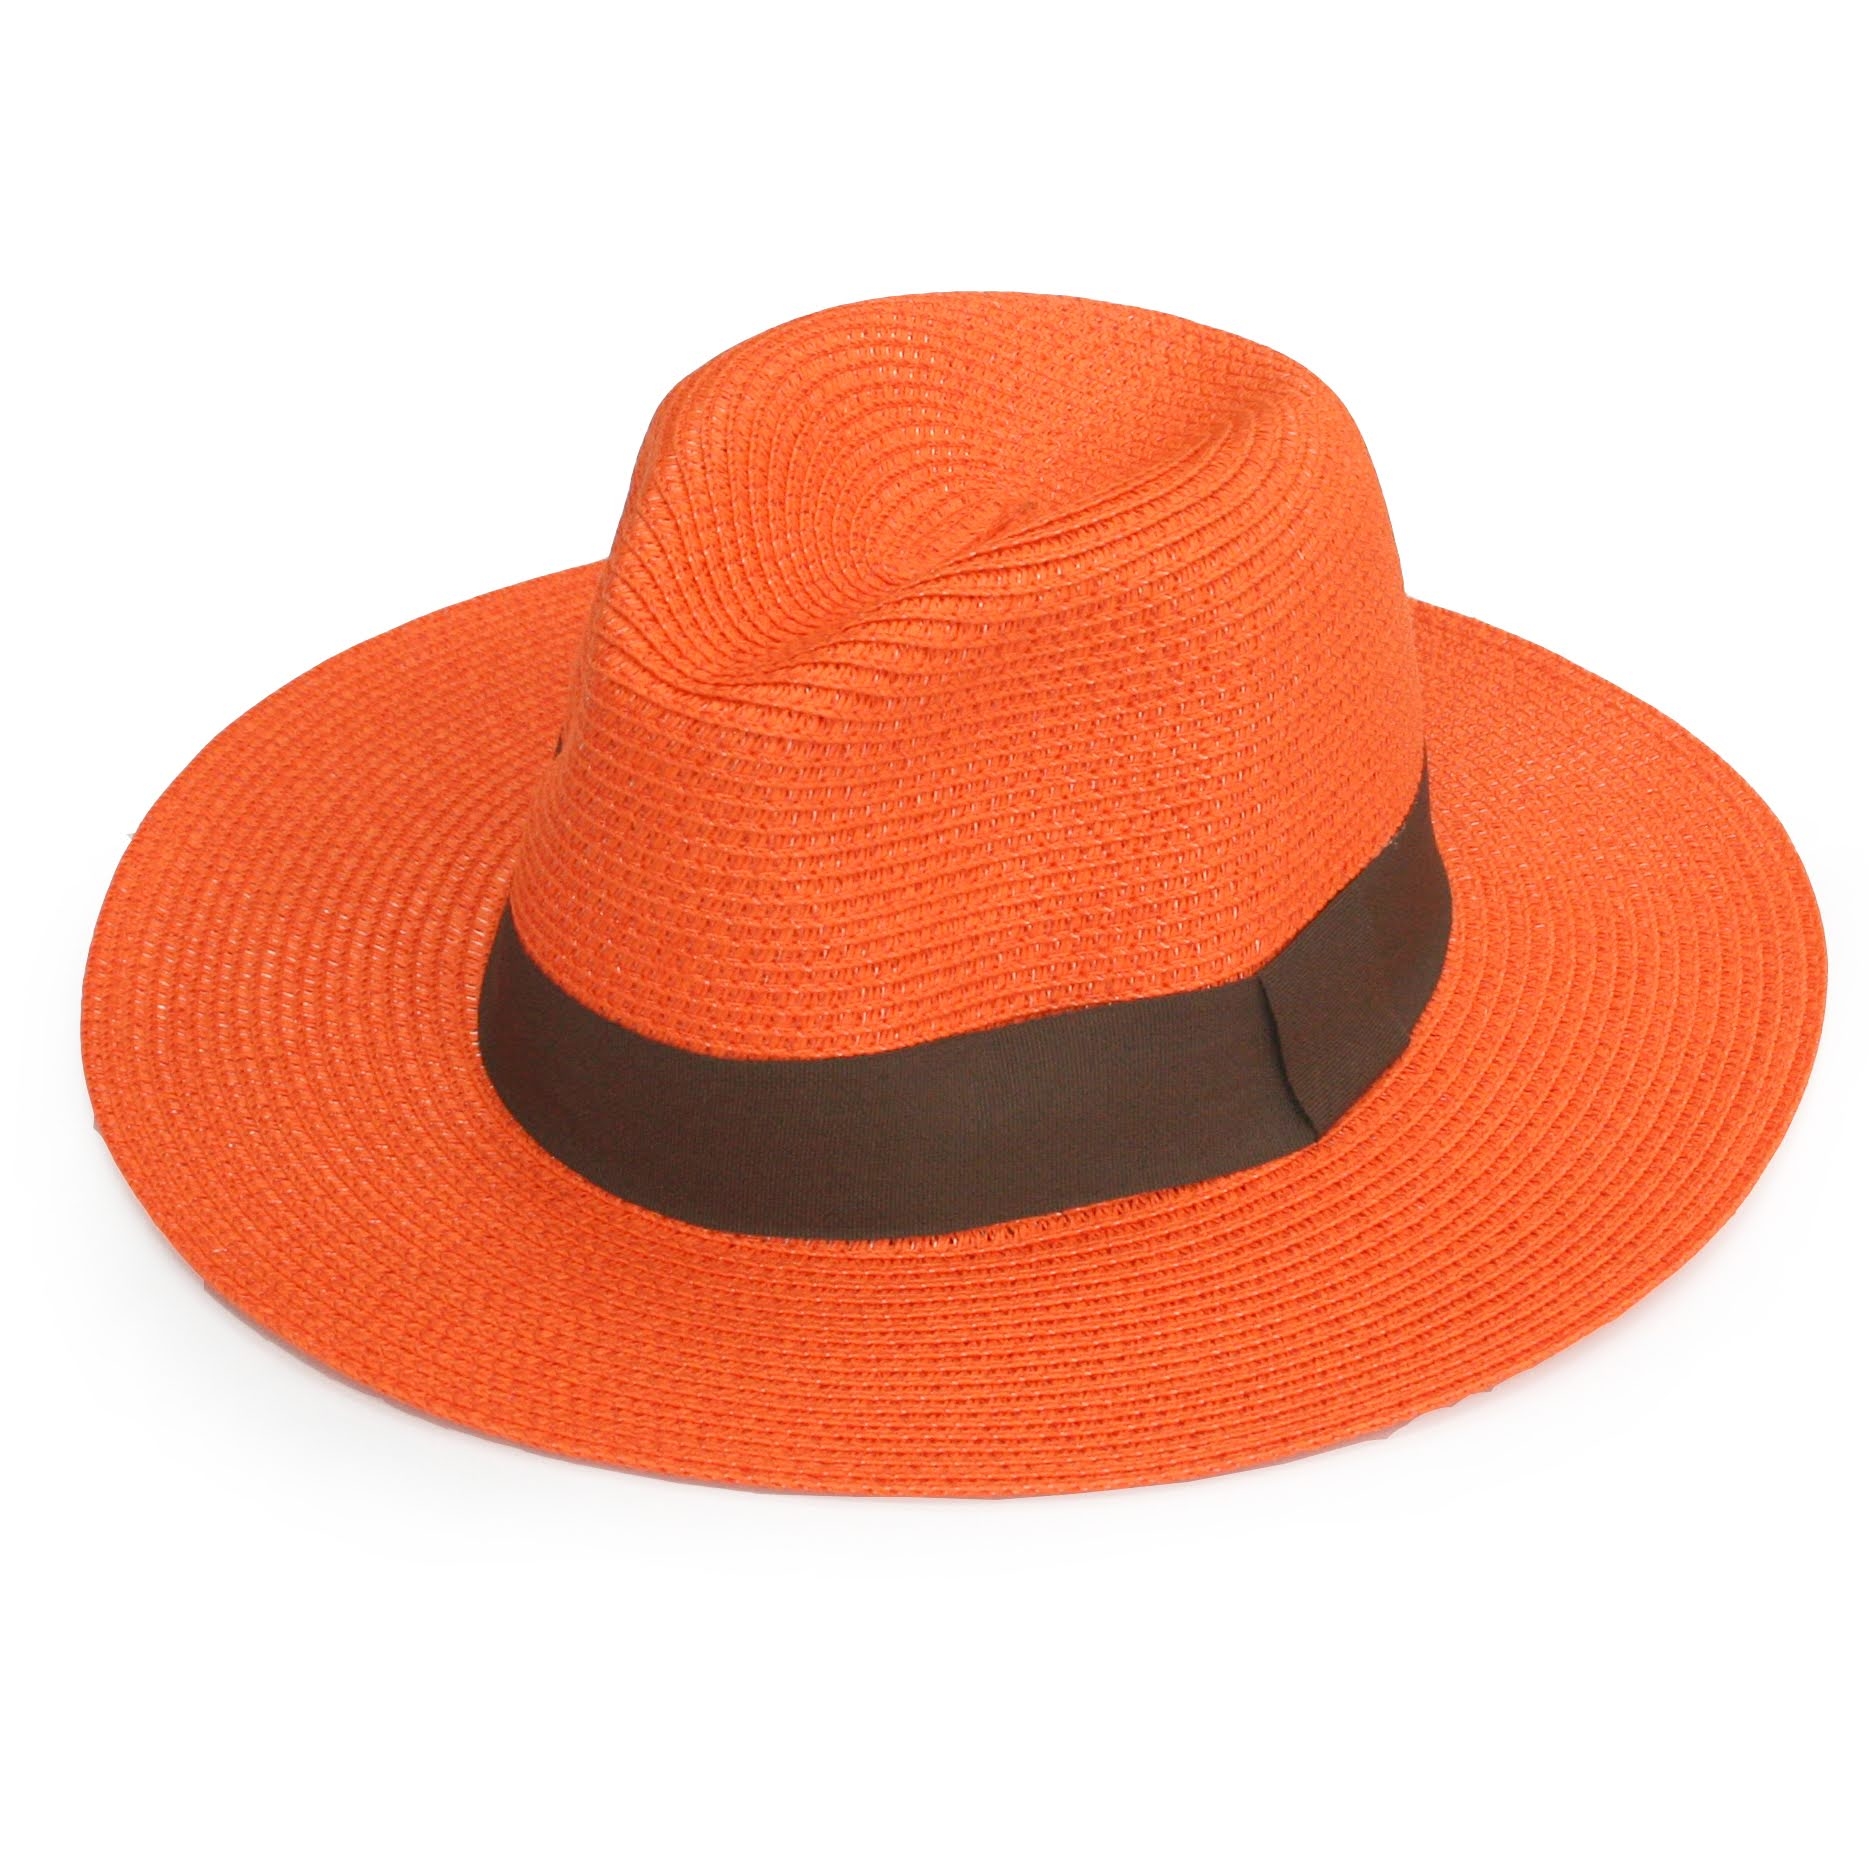 Orange Panama Folding Hat – One Size Fits All Design – The Scarf Giraffe